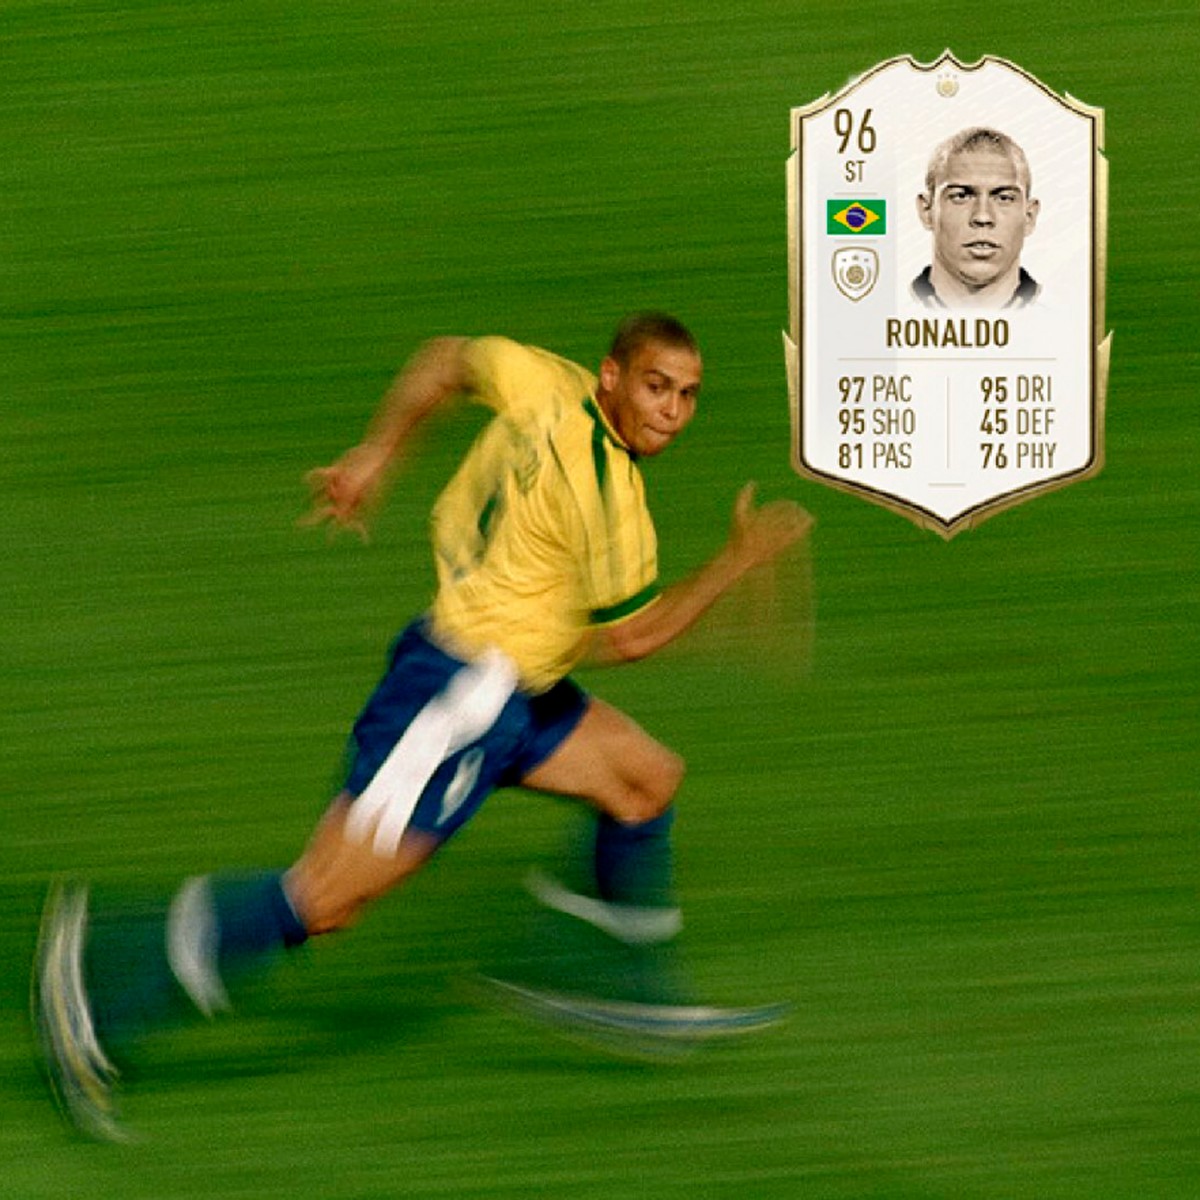 Ronaldinho icon cards : r/EASportsFC